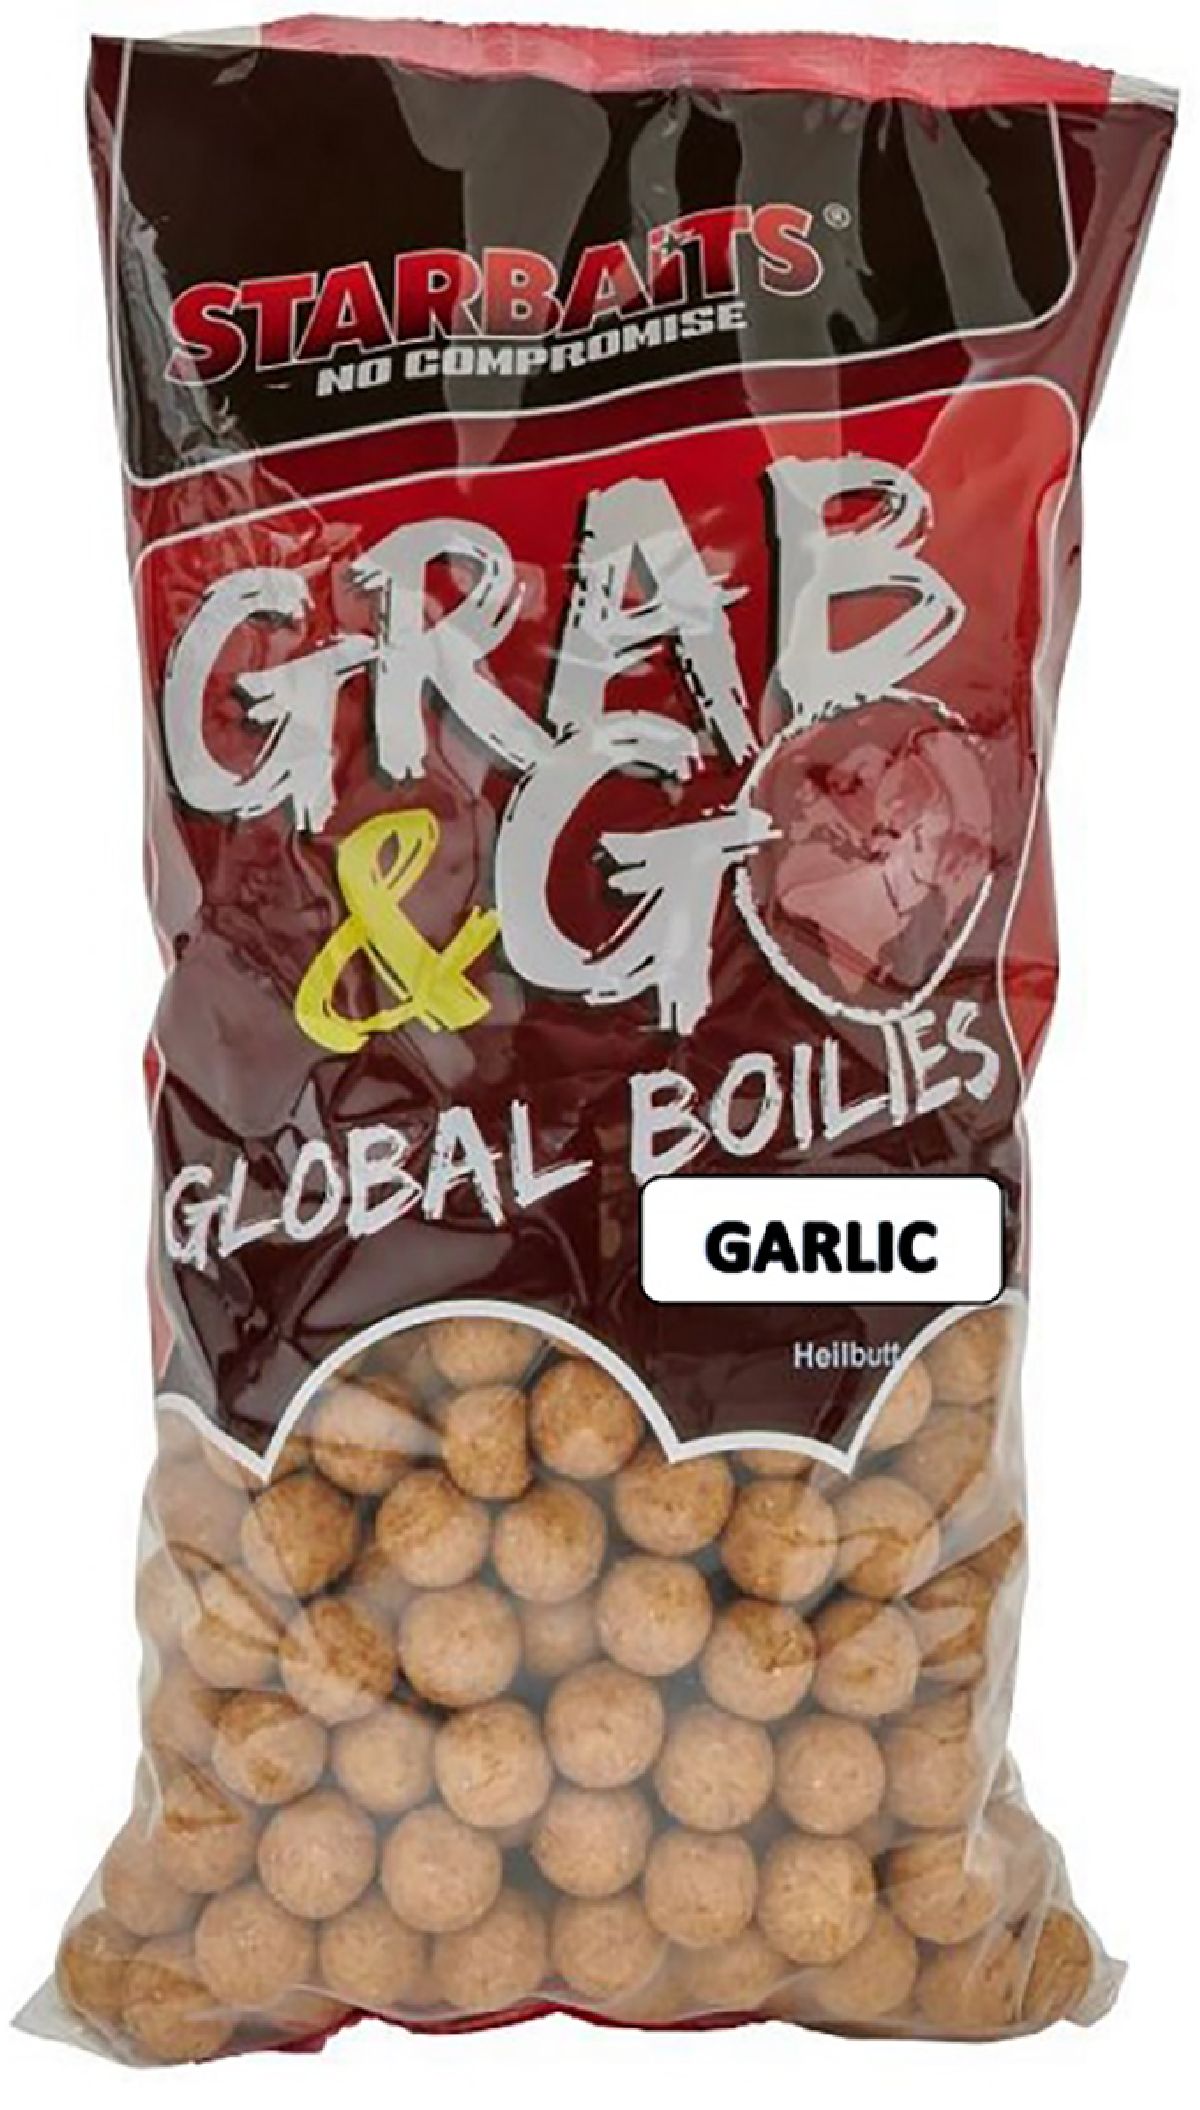 Starbaits Grab & Go Global Boilies 14mm 1Kg Garlic